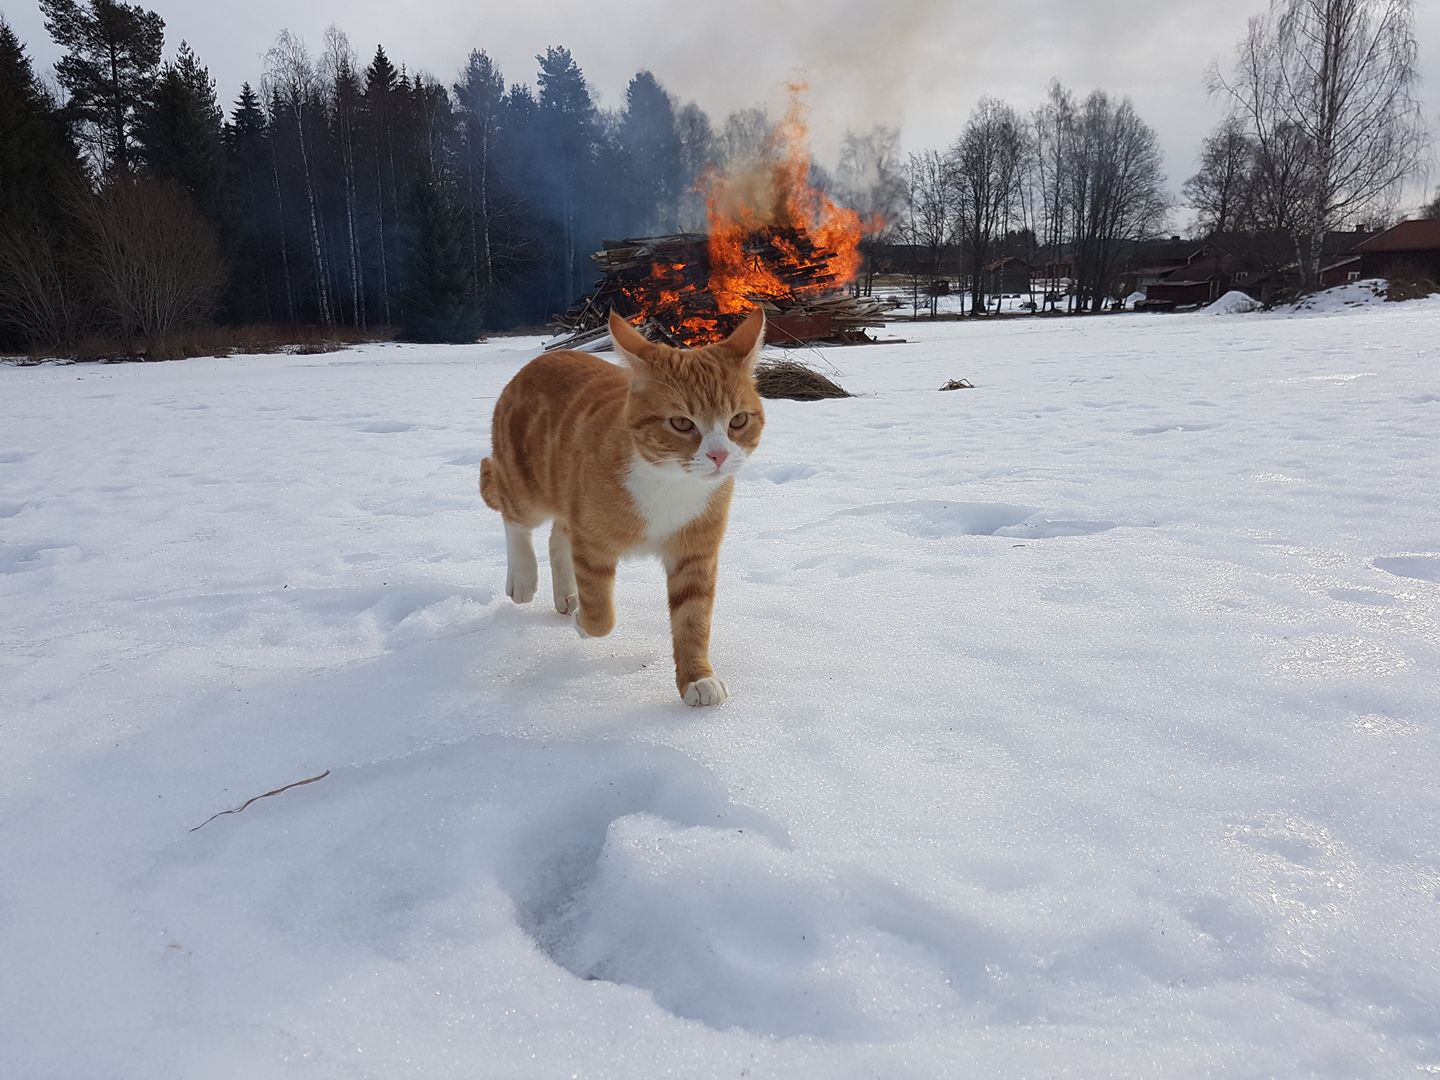 cat walking away from fire - Uu!